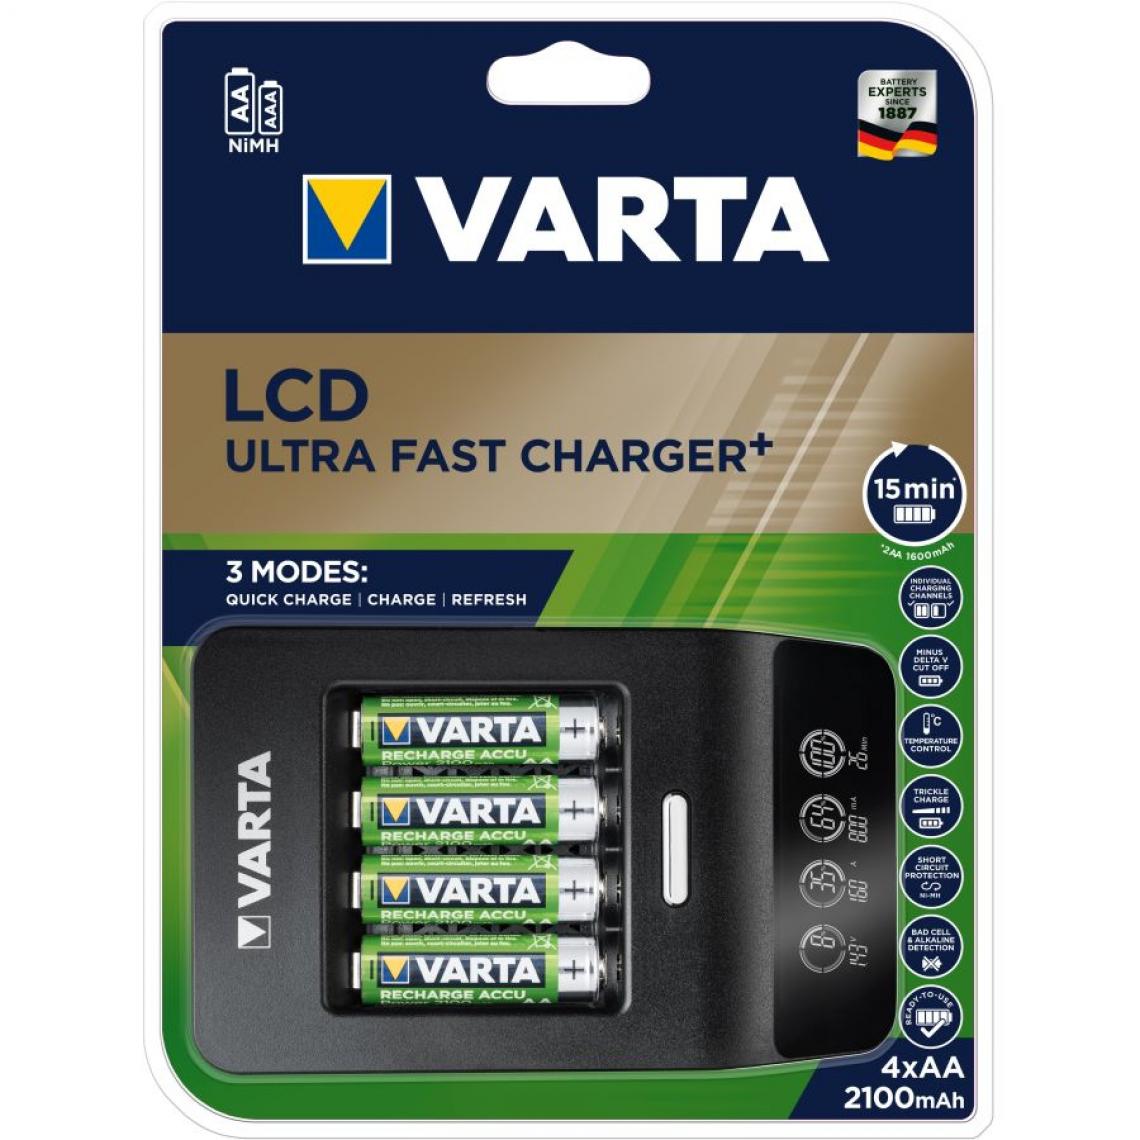 Varta - Varta Ladegerät LCD Ultra Fast Charger+ inkl. 4x AA 2100mAh 57685 101 441 - Accessoires et pièces